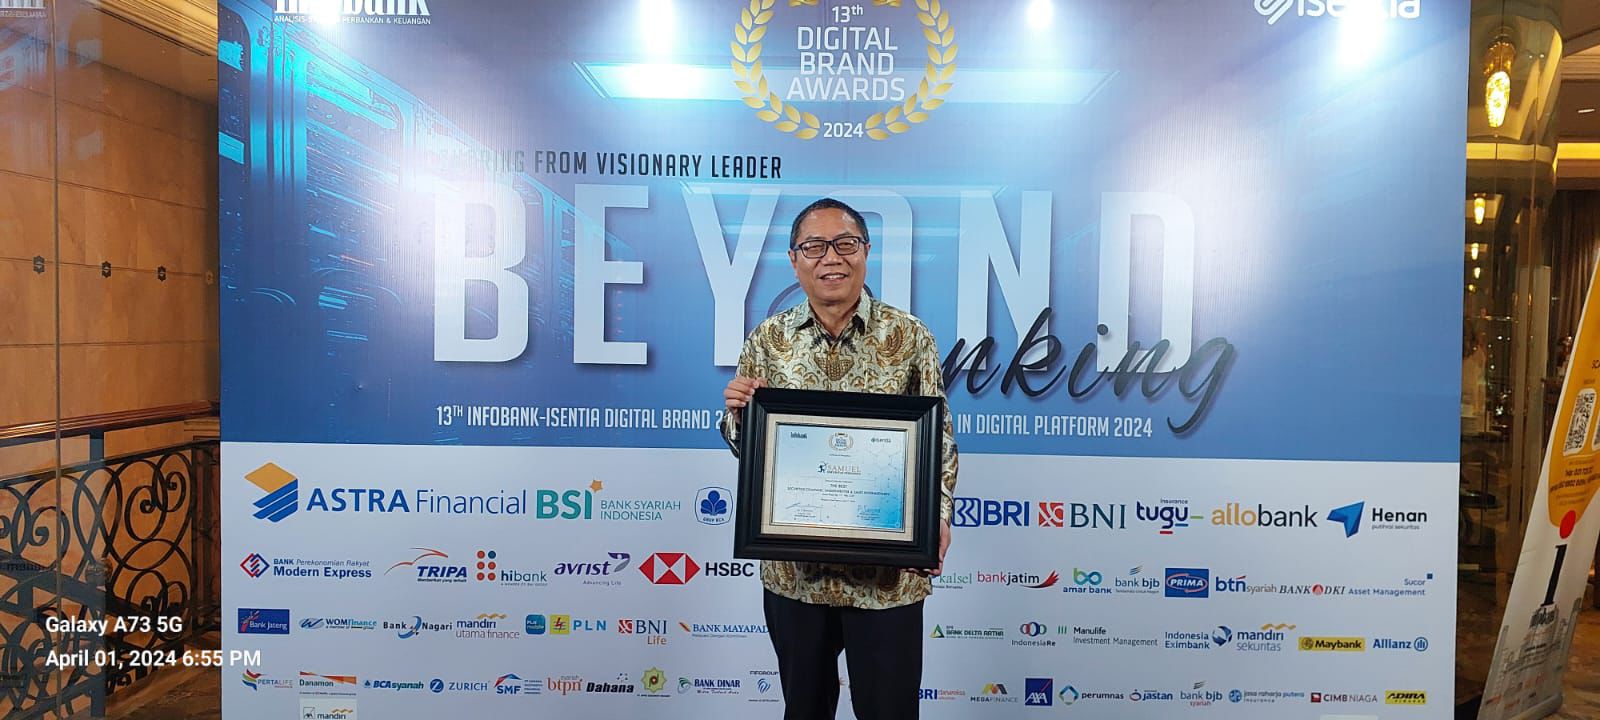 digital brand awards